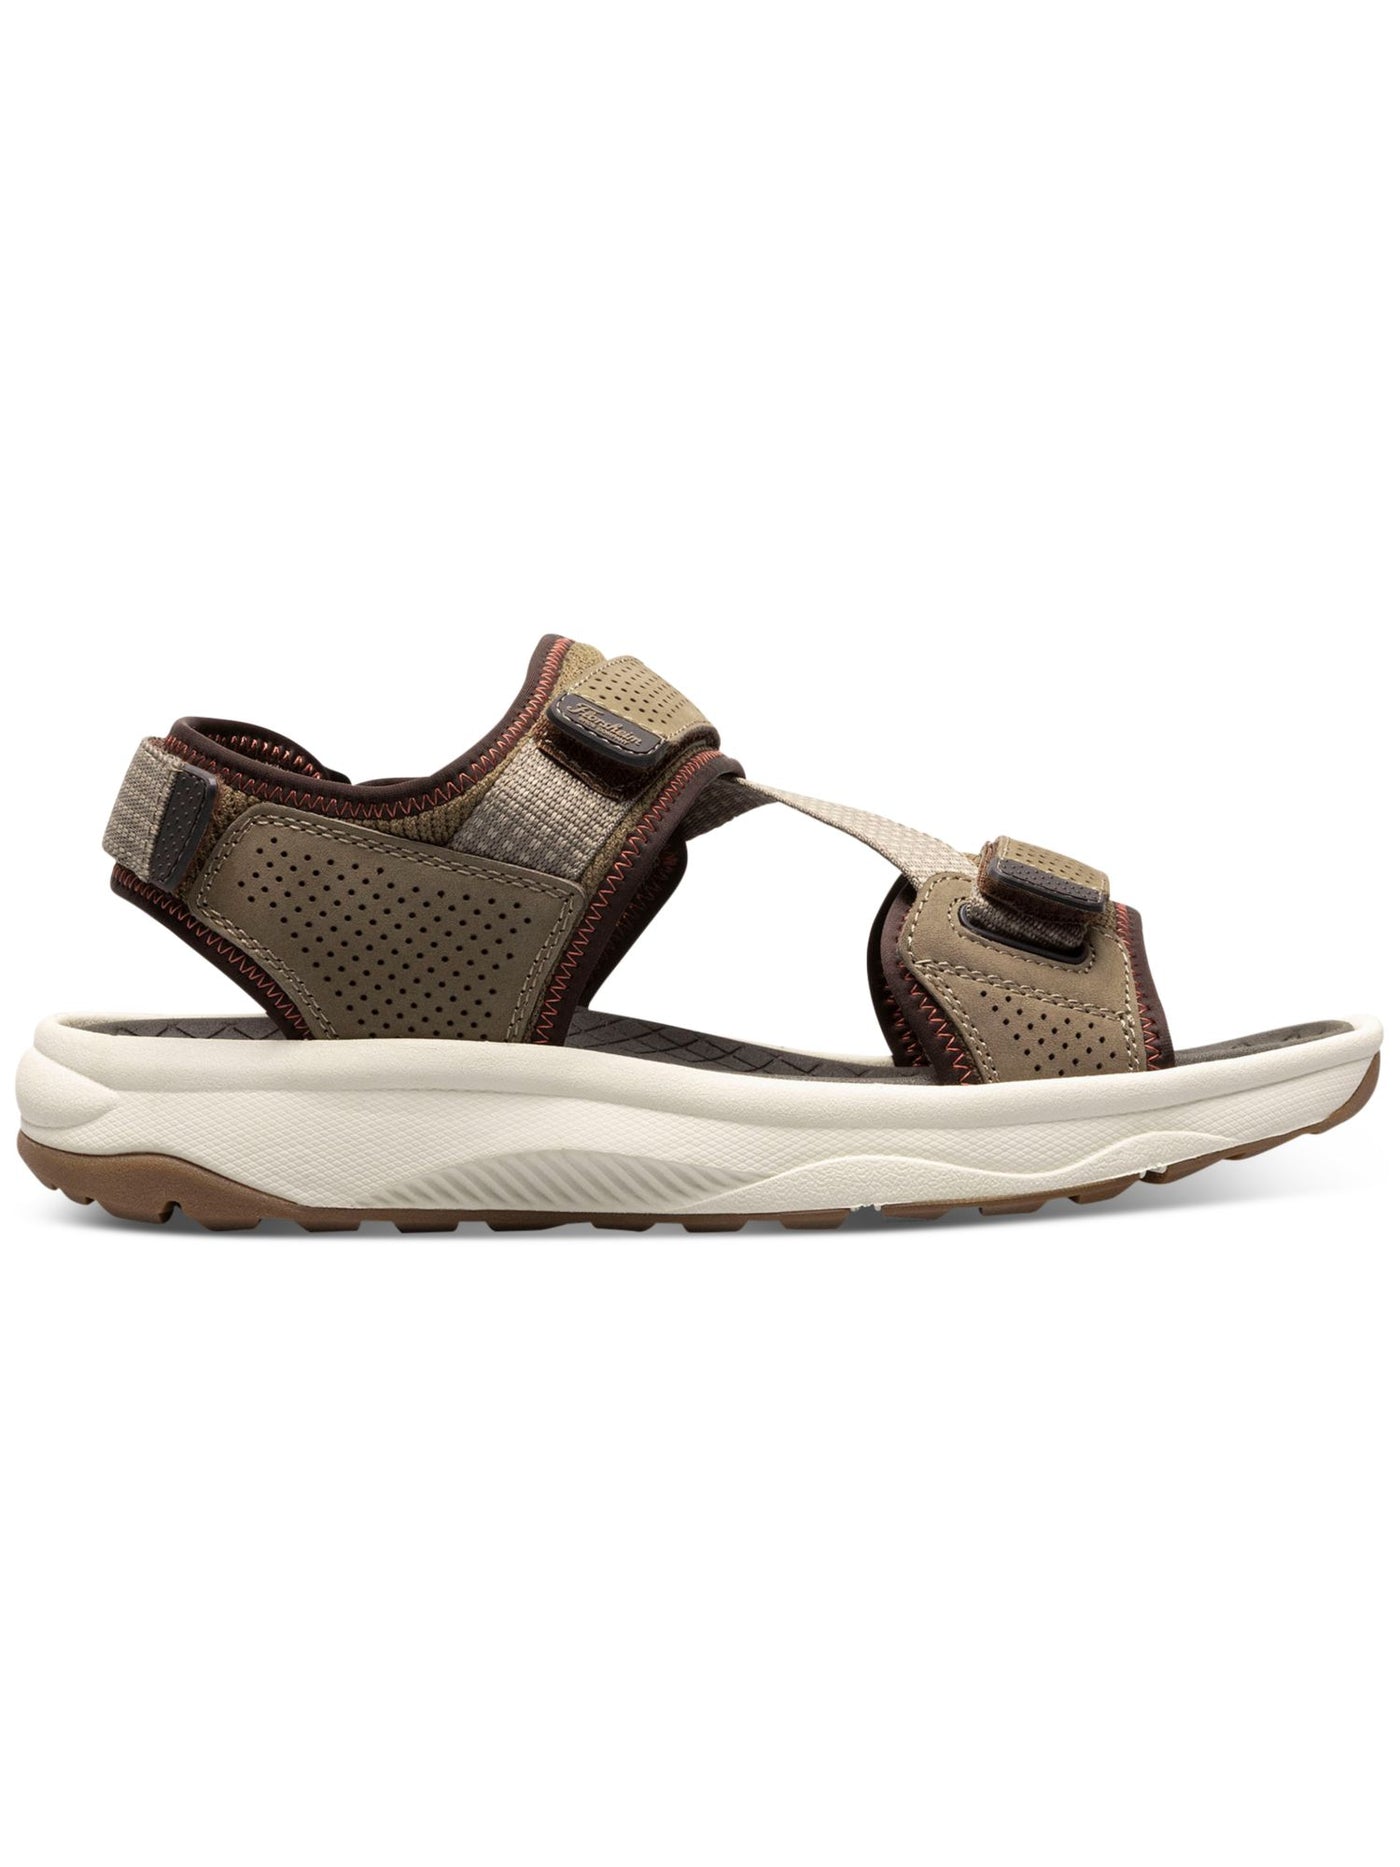 FLORSHEIM Mens Beige Adjustable Perforated Tread Lite Round Toe Wedge Sandals Shoes 10 M